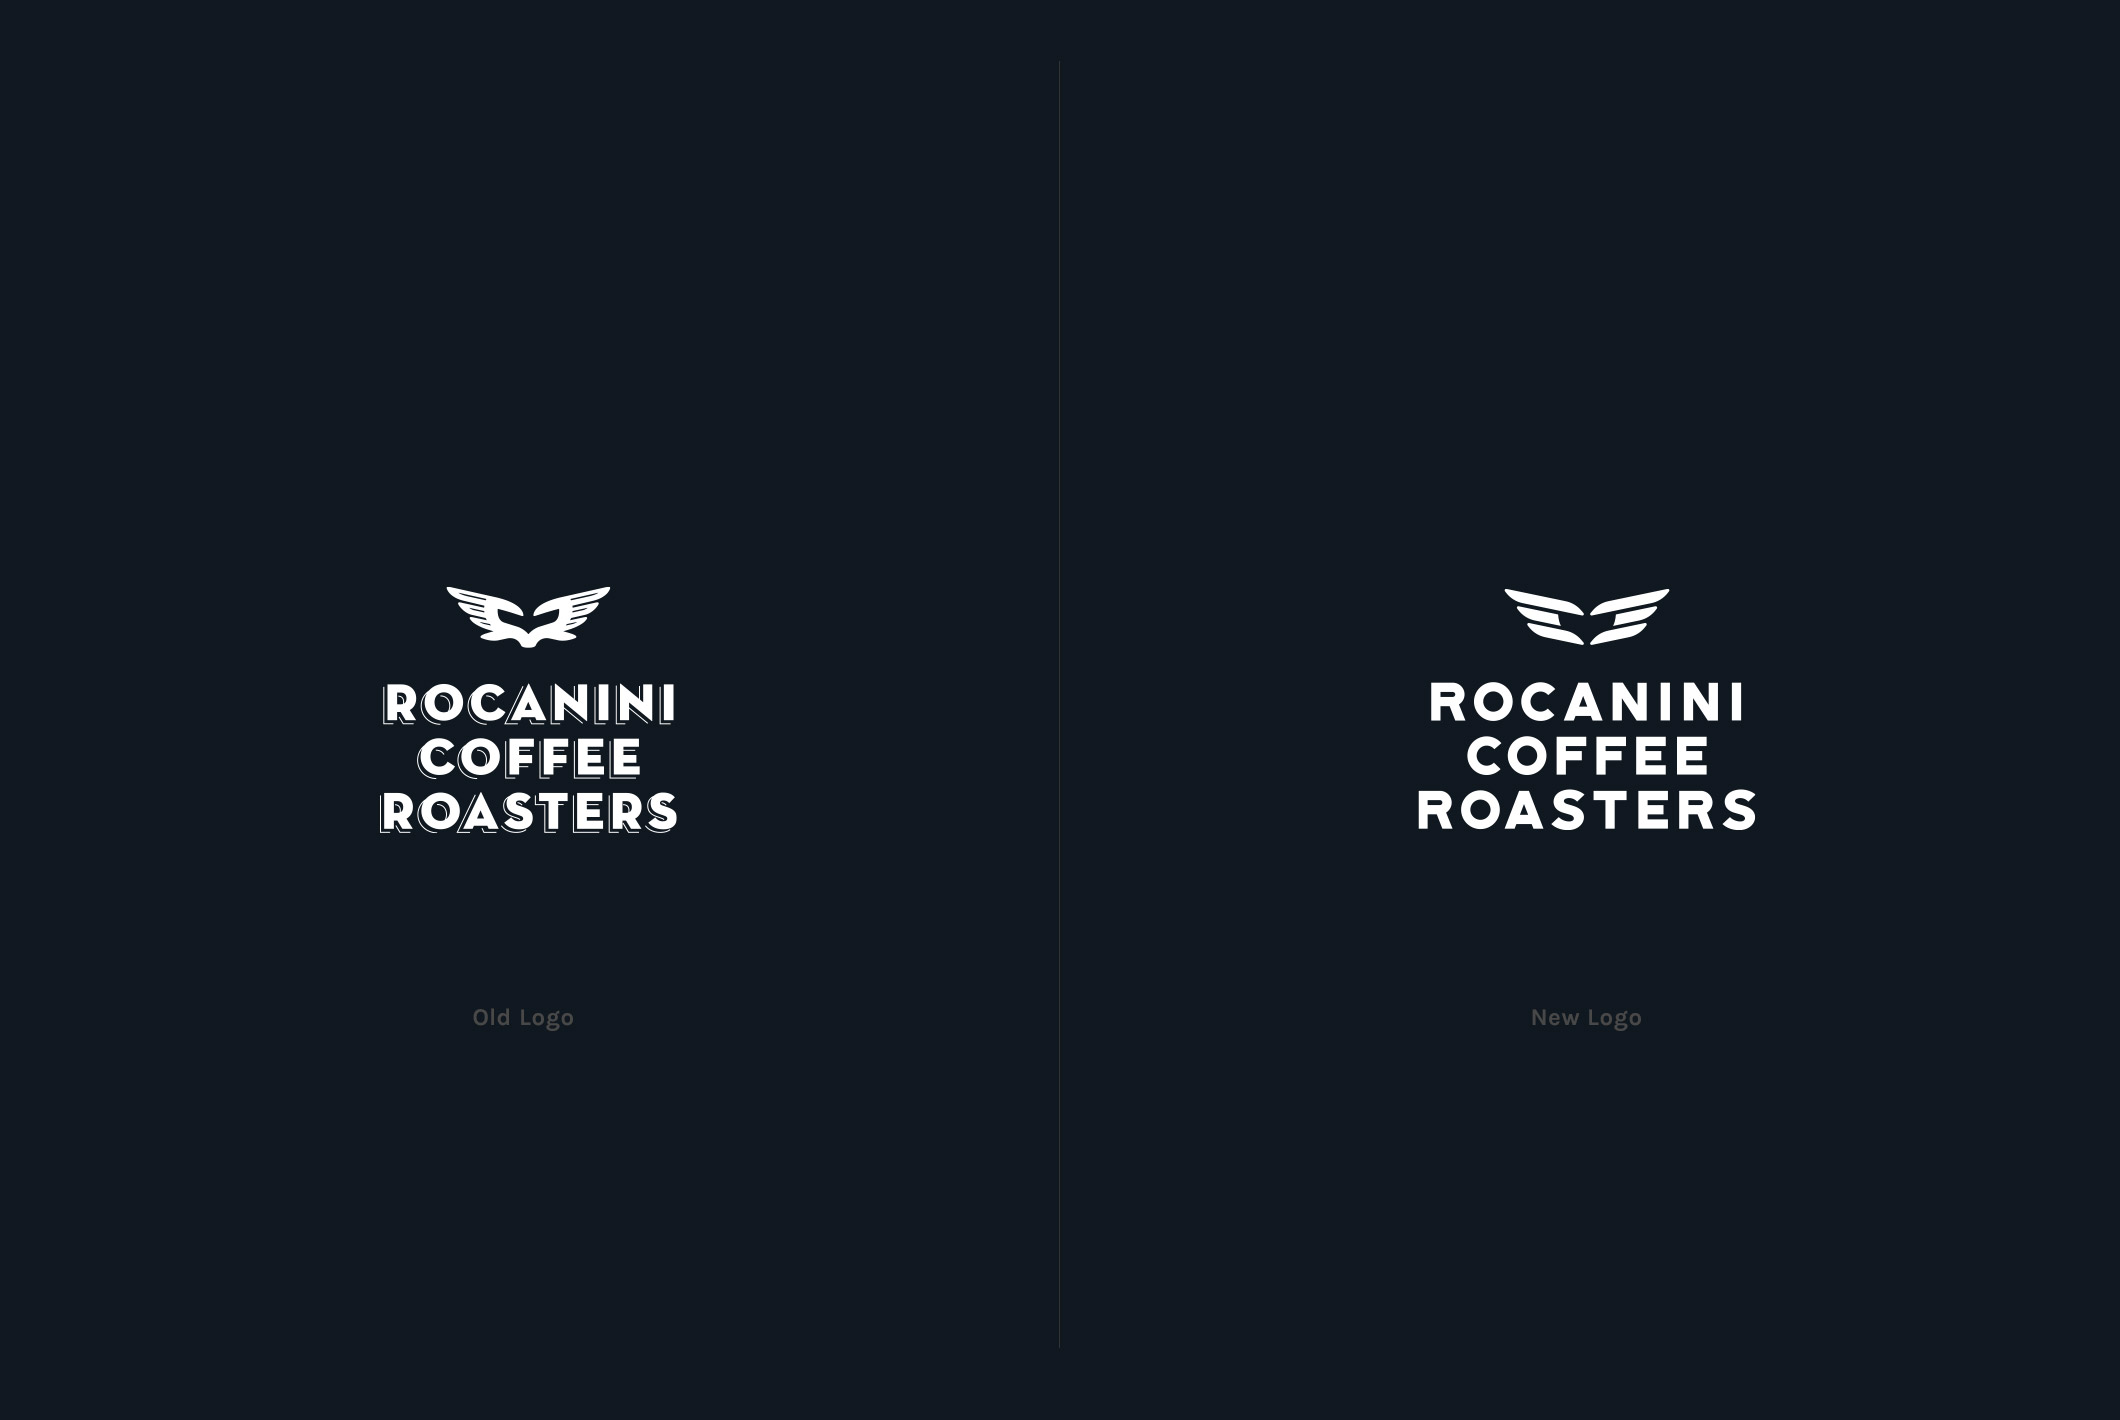 Rocanini Coffee Roasters